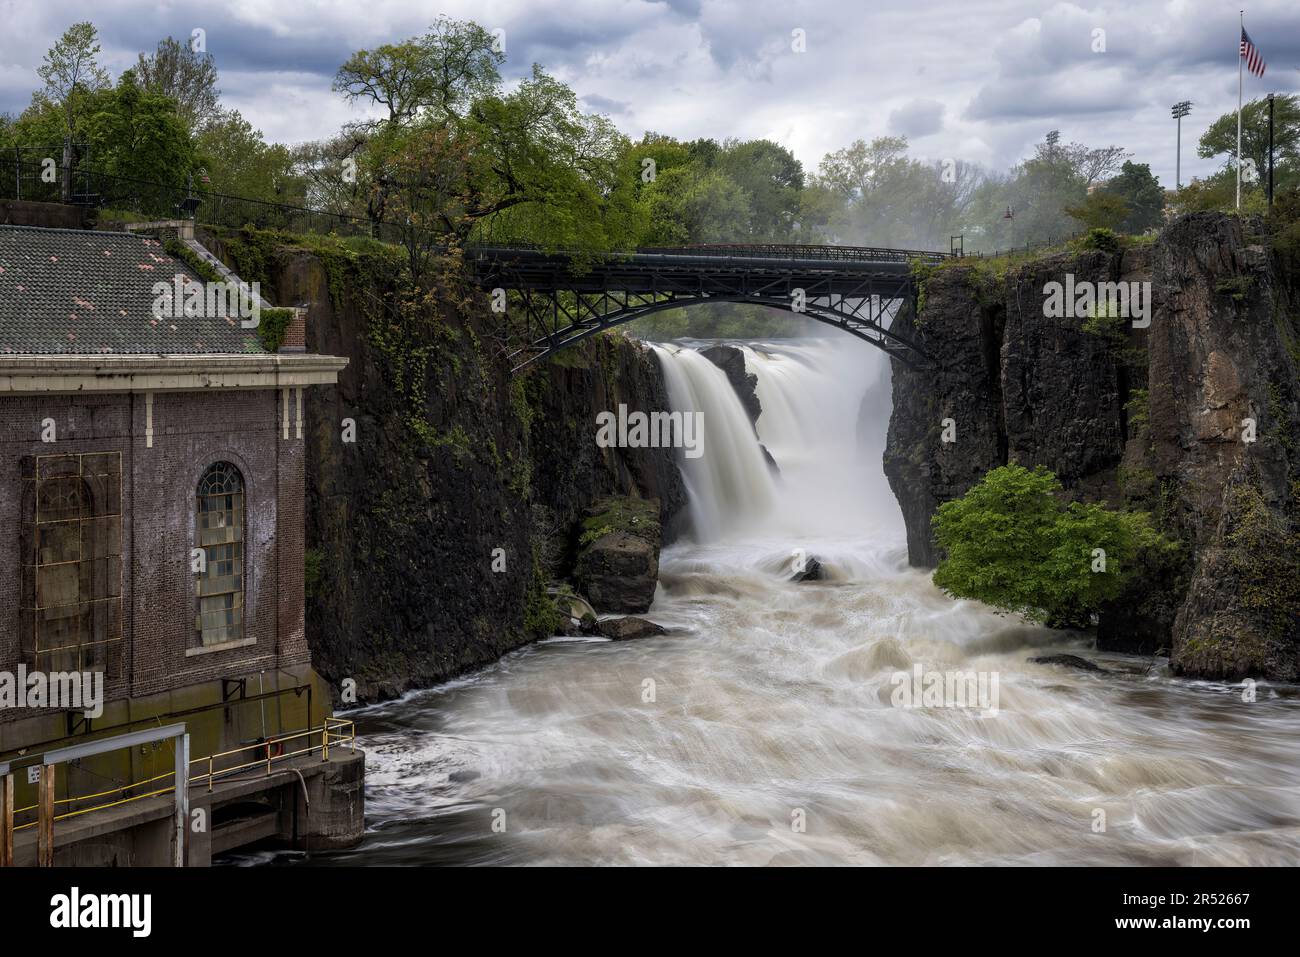 Intimes Great Falls NJ - Paterson Great Falls National Historical Park aus nächster Nähe bei starkem Wasserfluss. Dieses Bild ist auch als b verfügbar Stockfoto